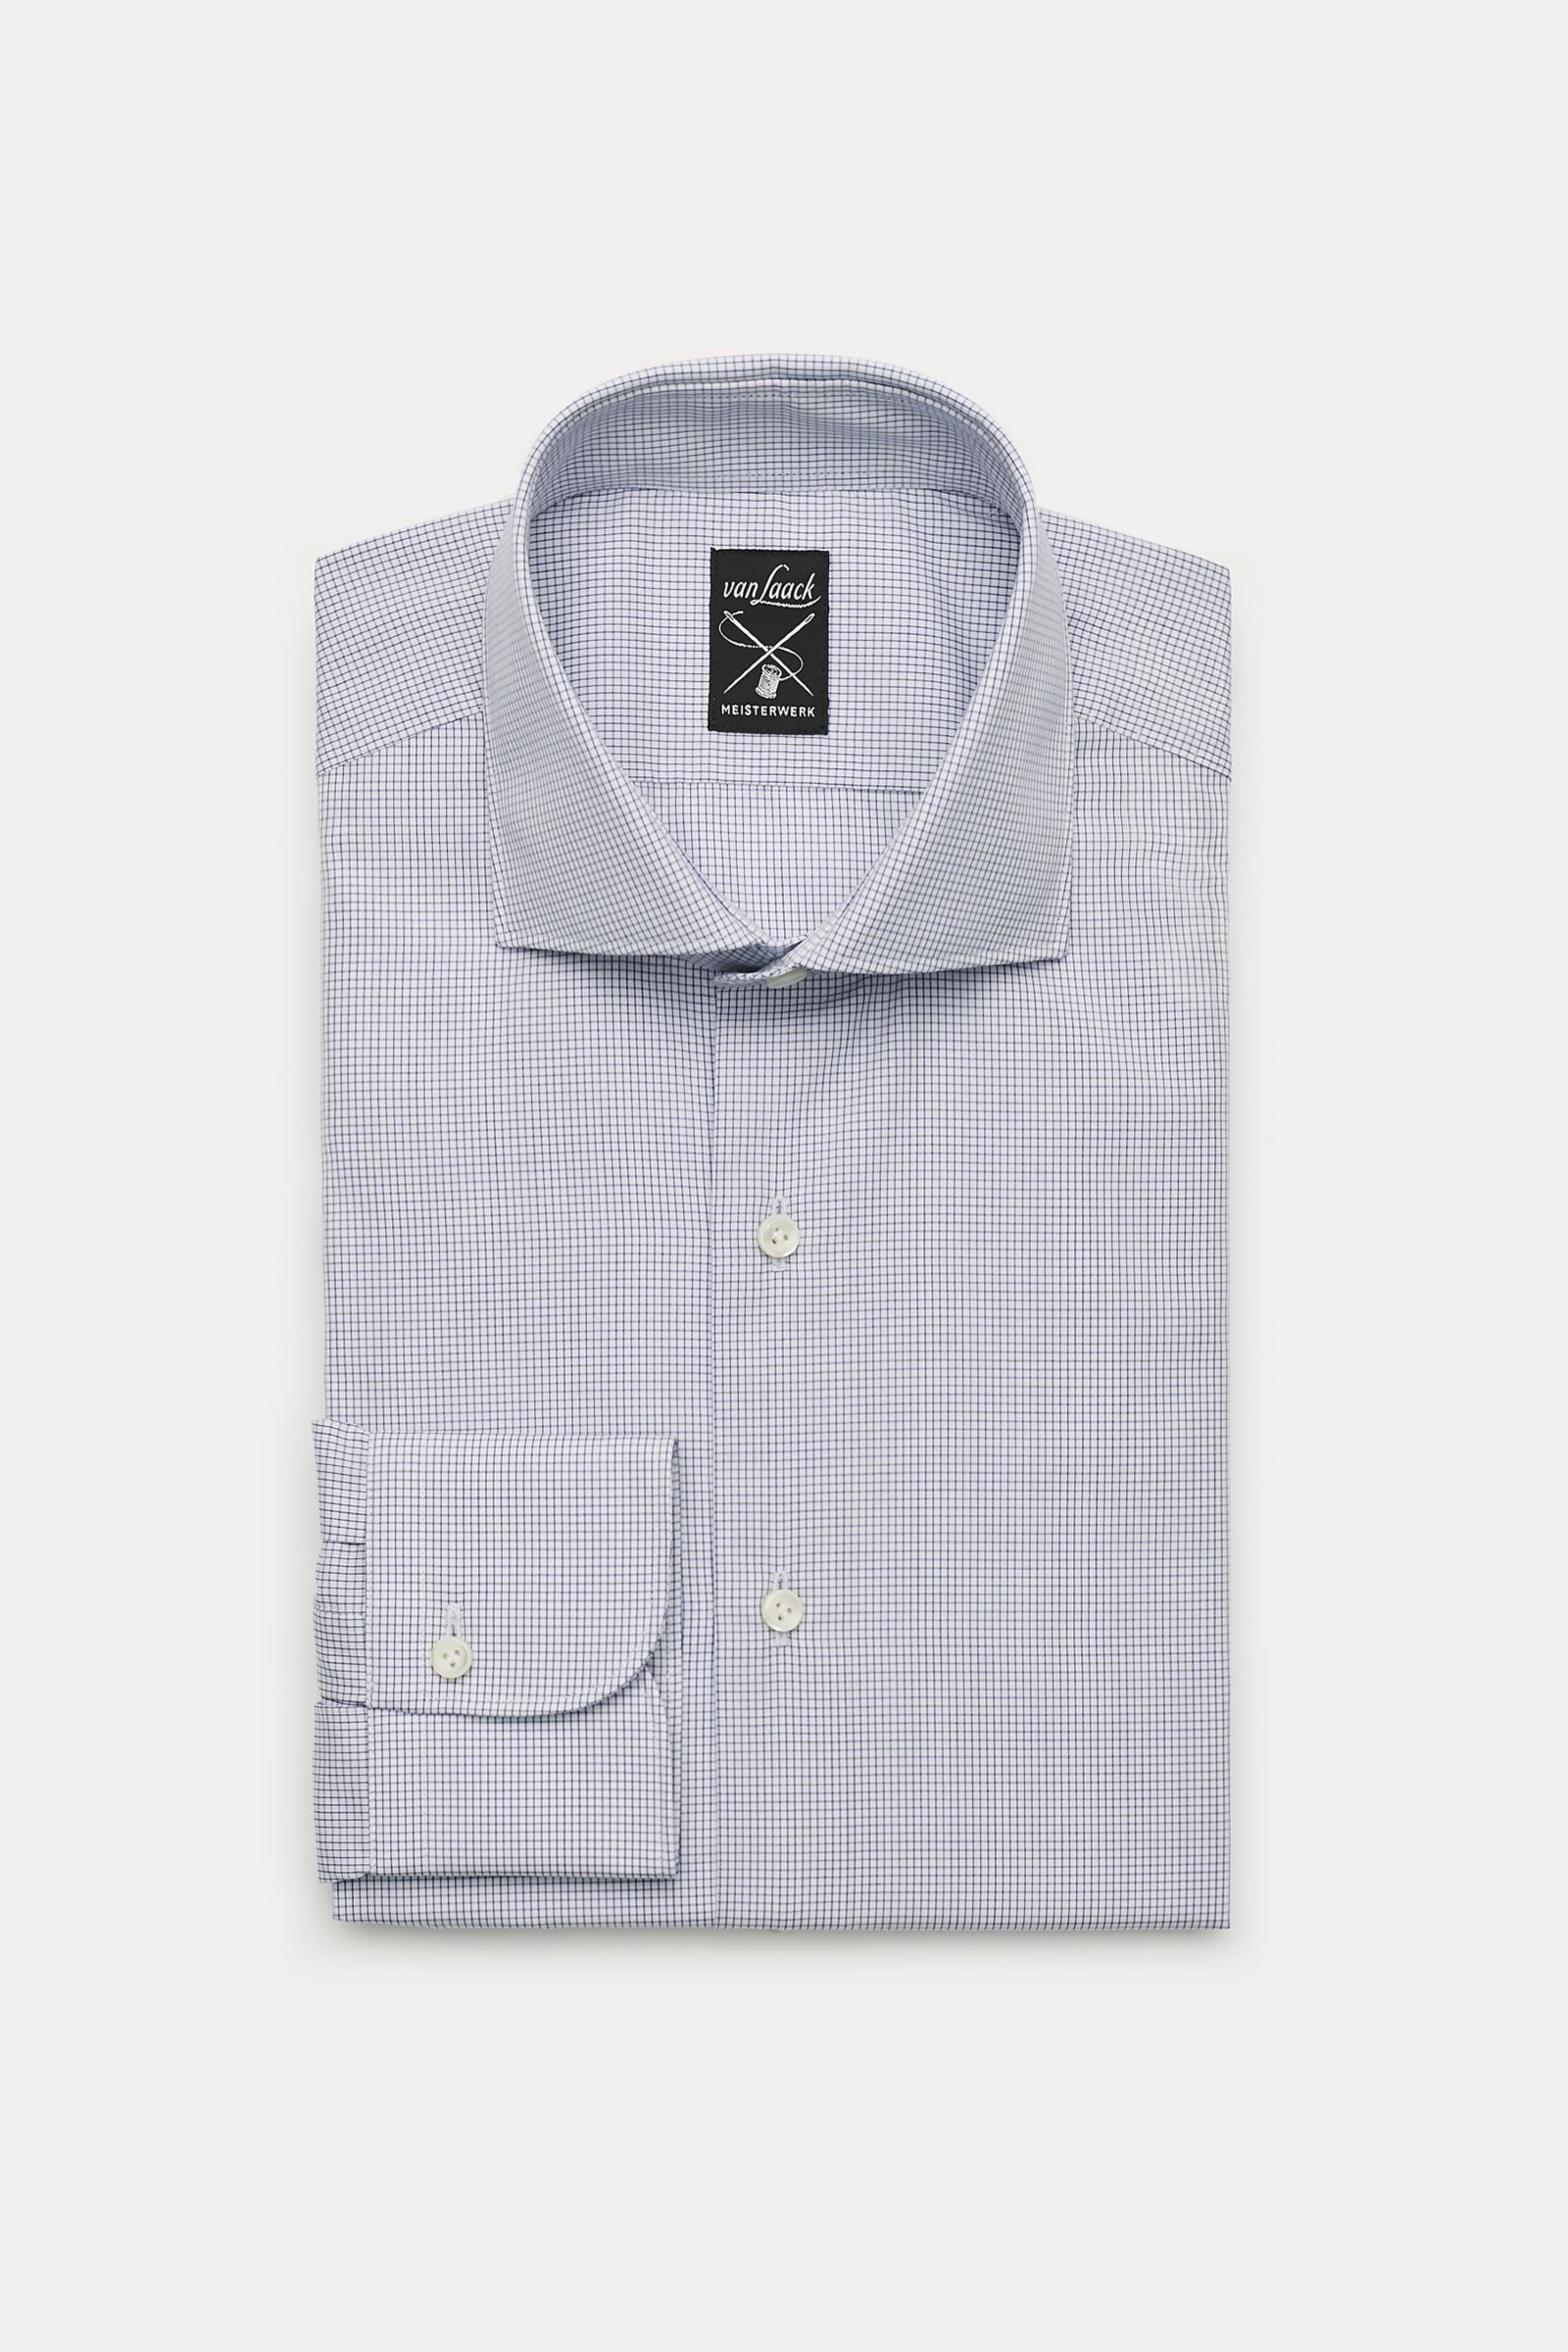 Business shirt 'Mivara Tailor Fit' shark collar navy/white checked